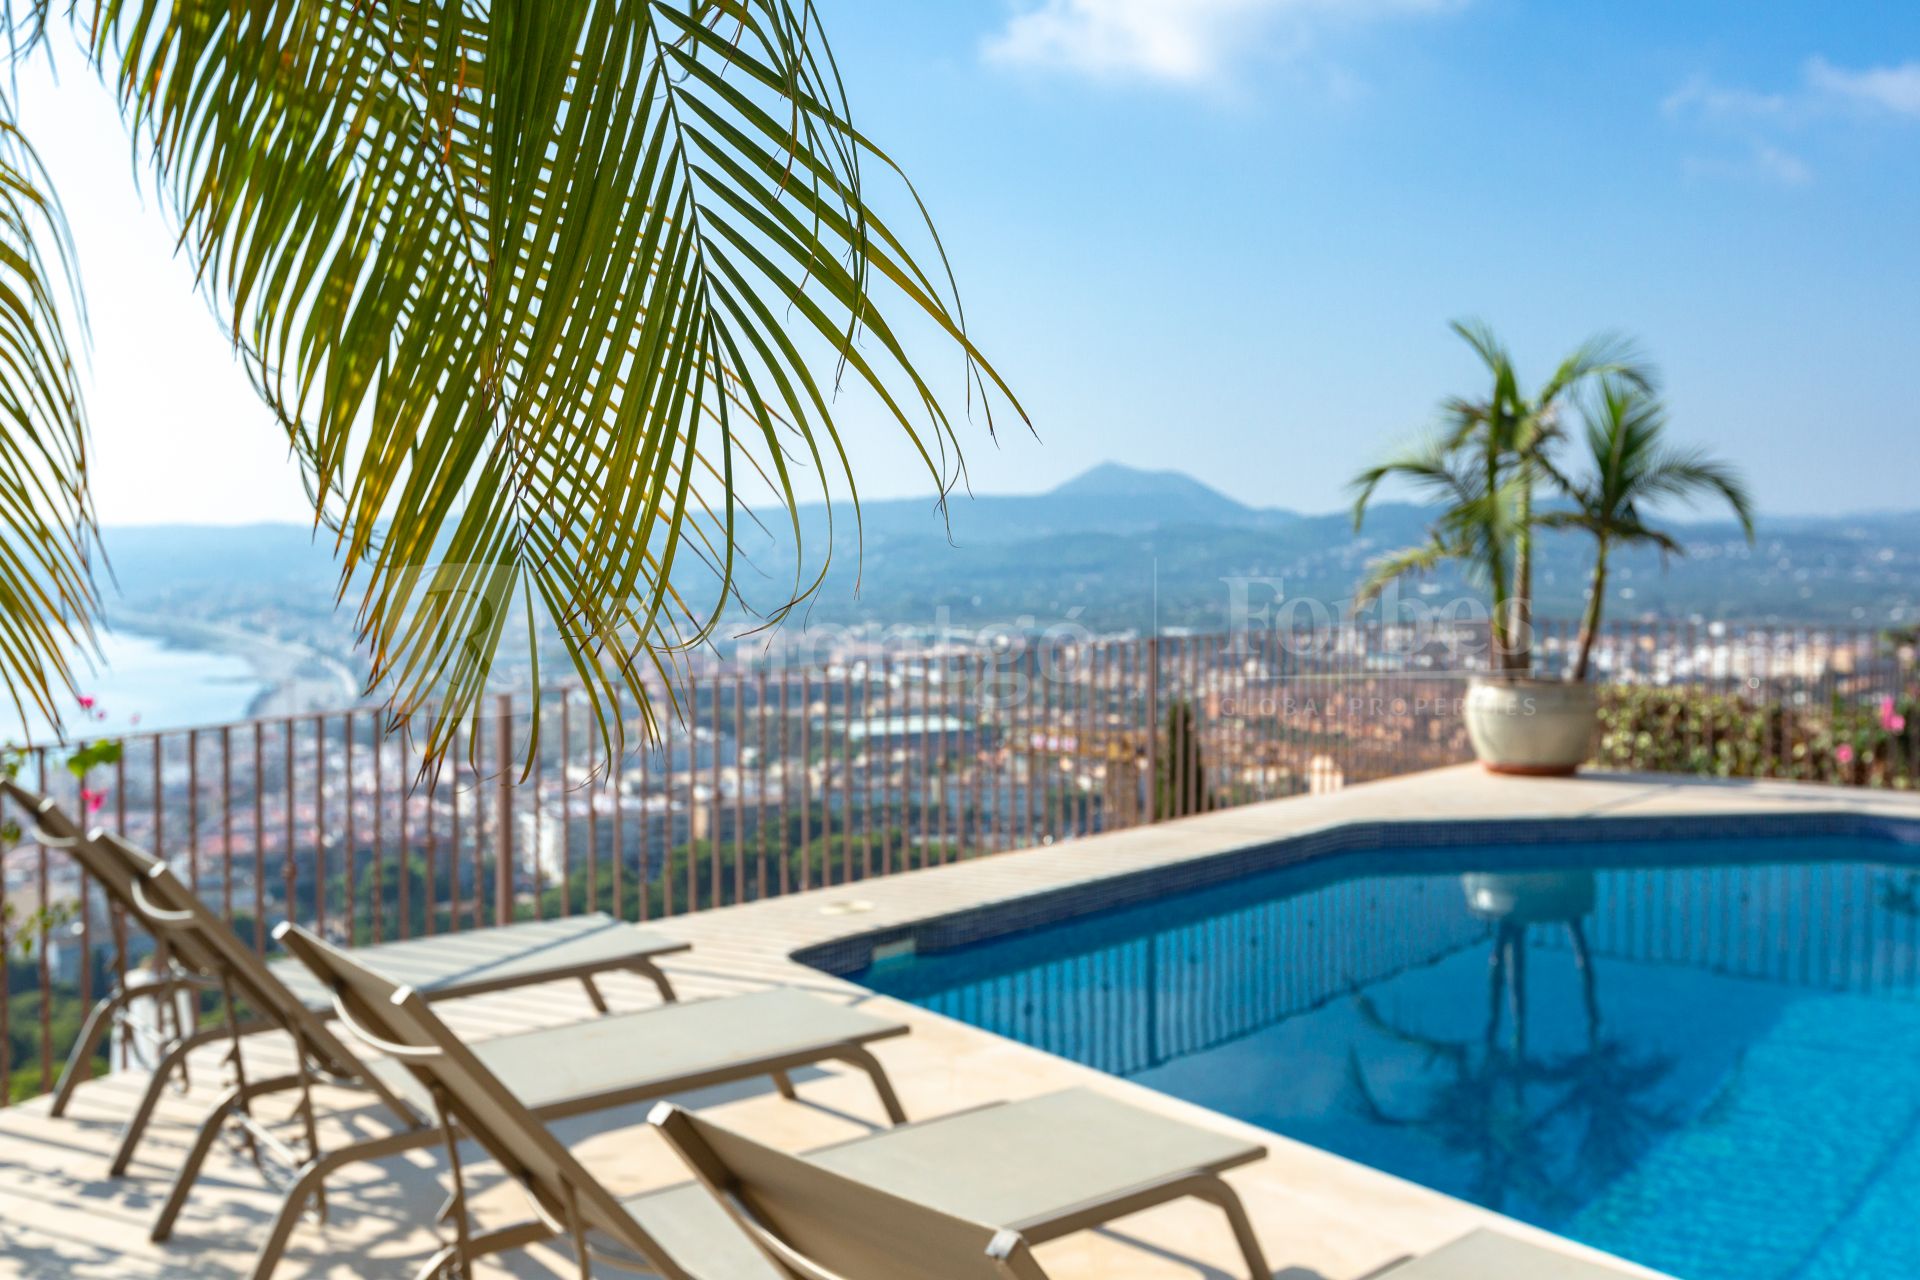 Bright Spanish elegant villa setting overlooking the Bay of Javea